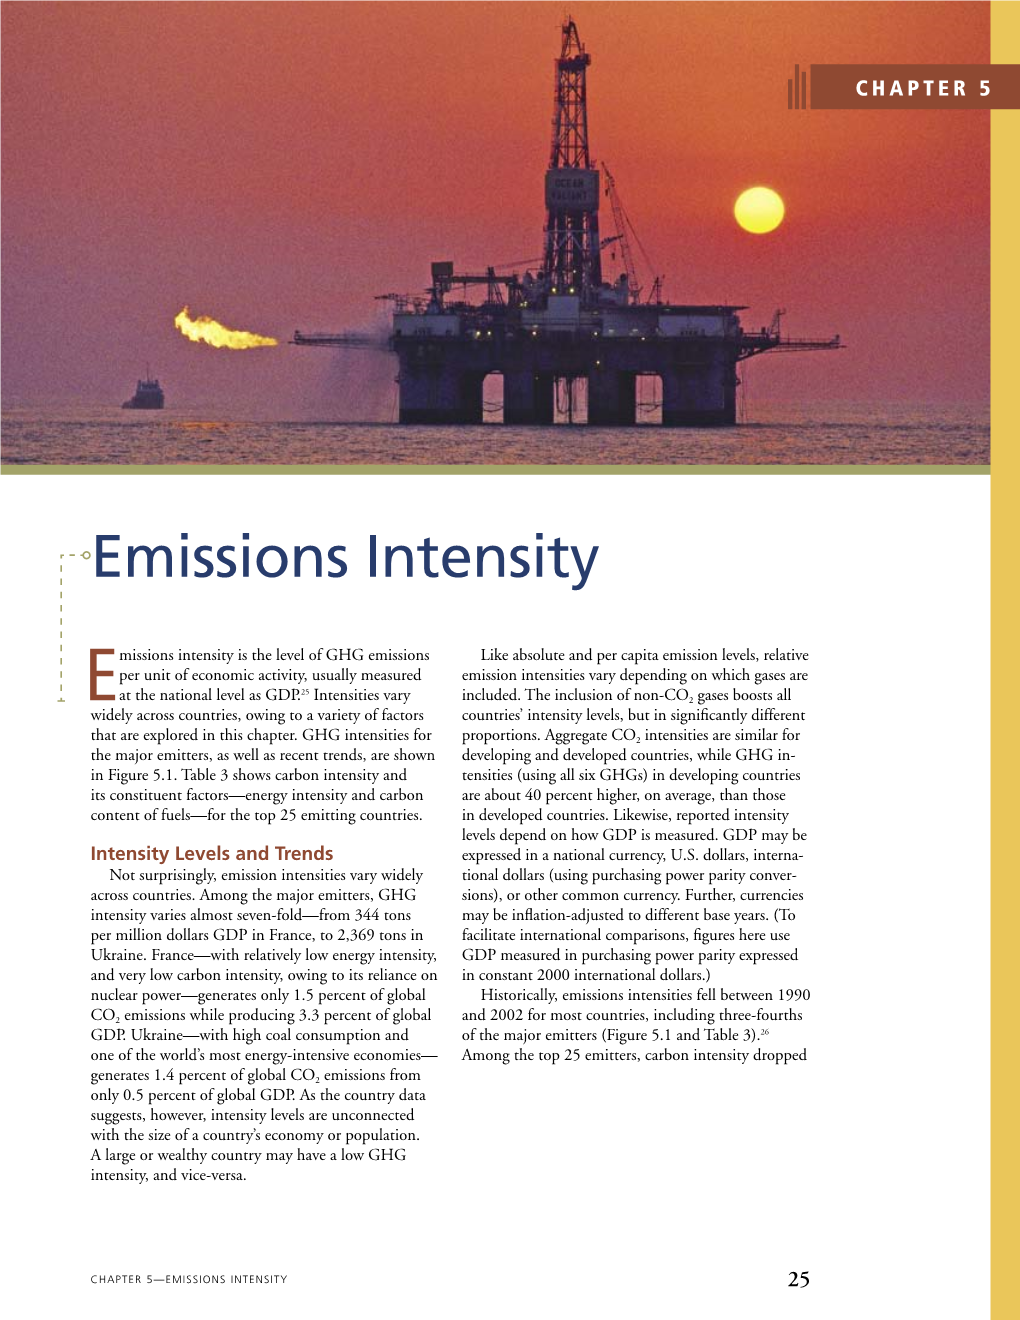 Emissions Intensity